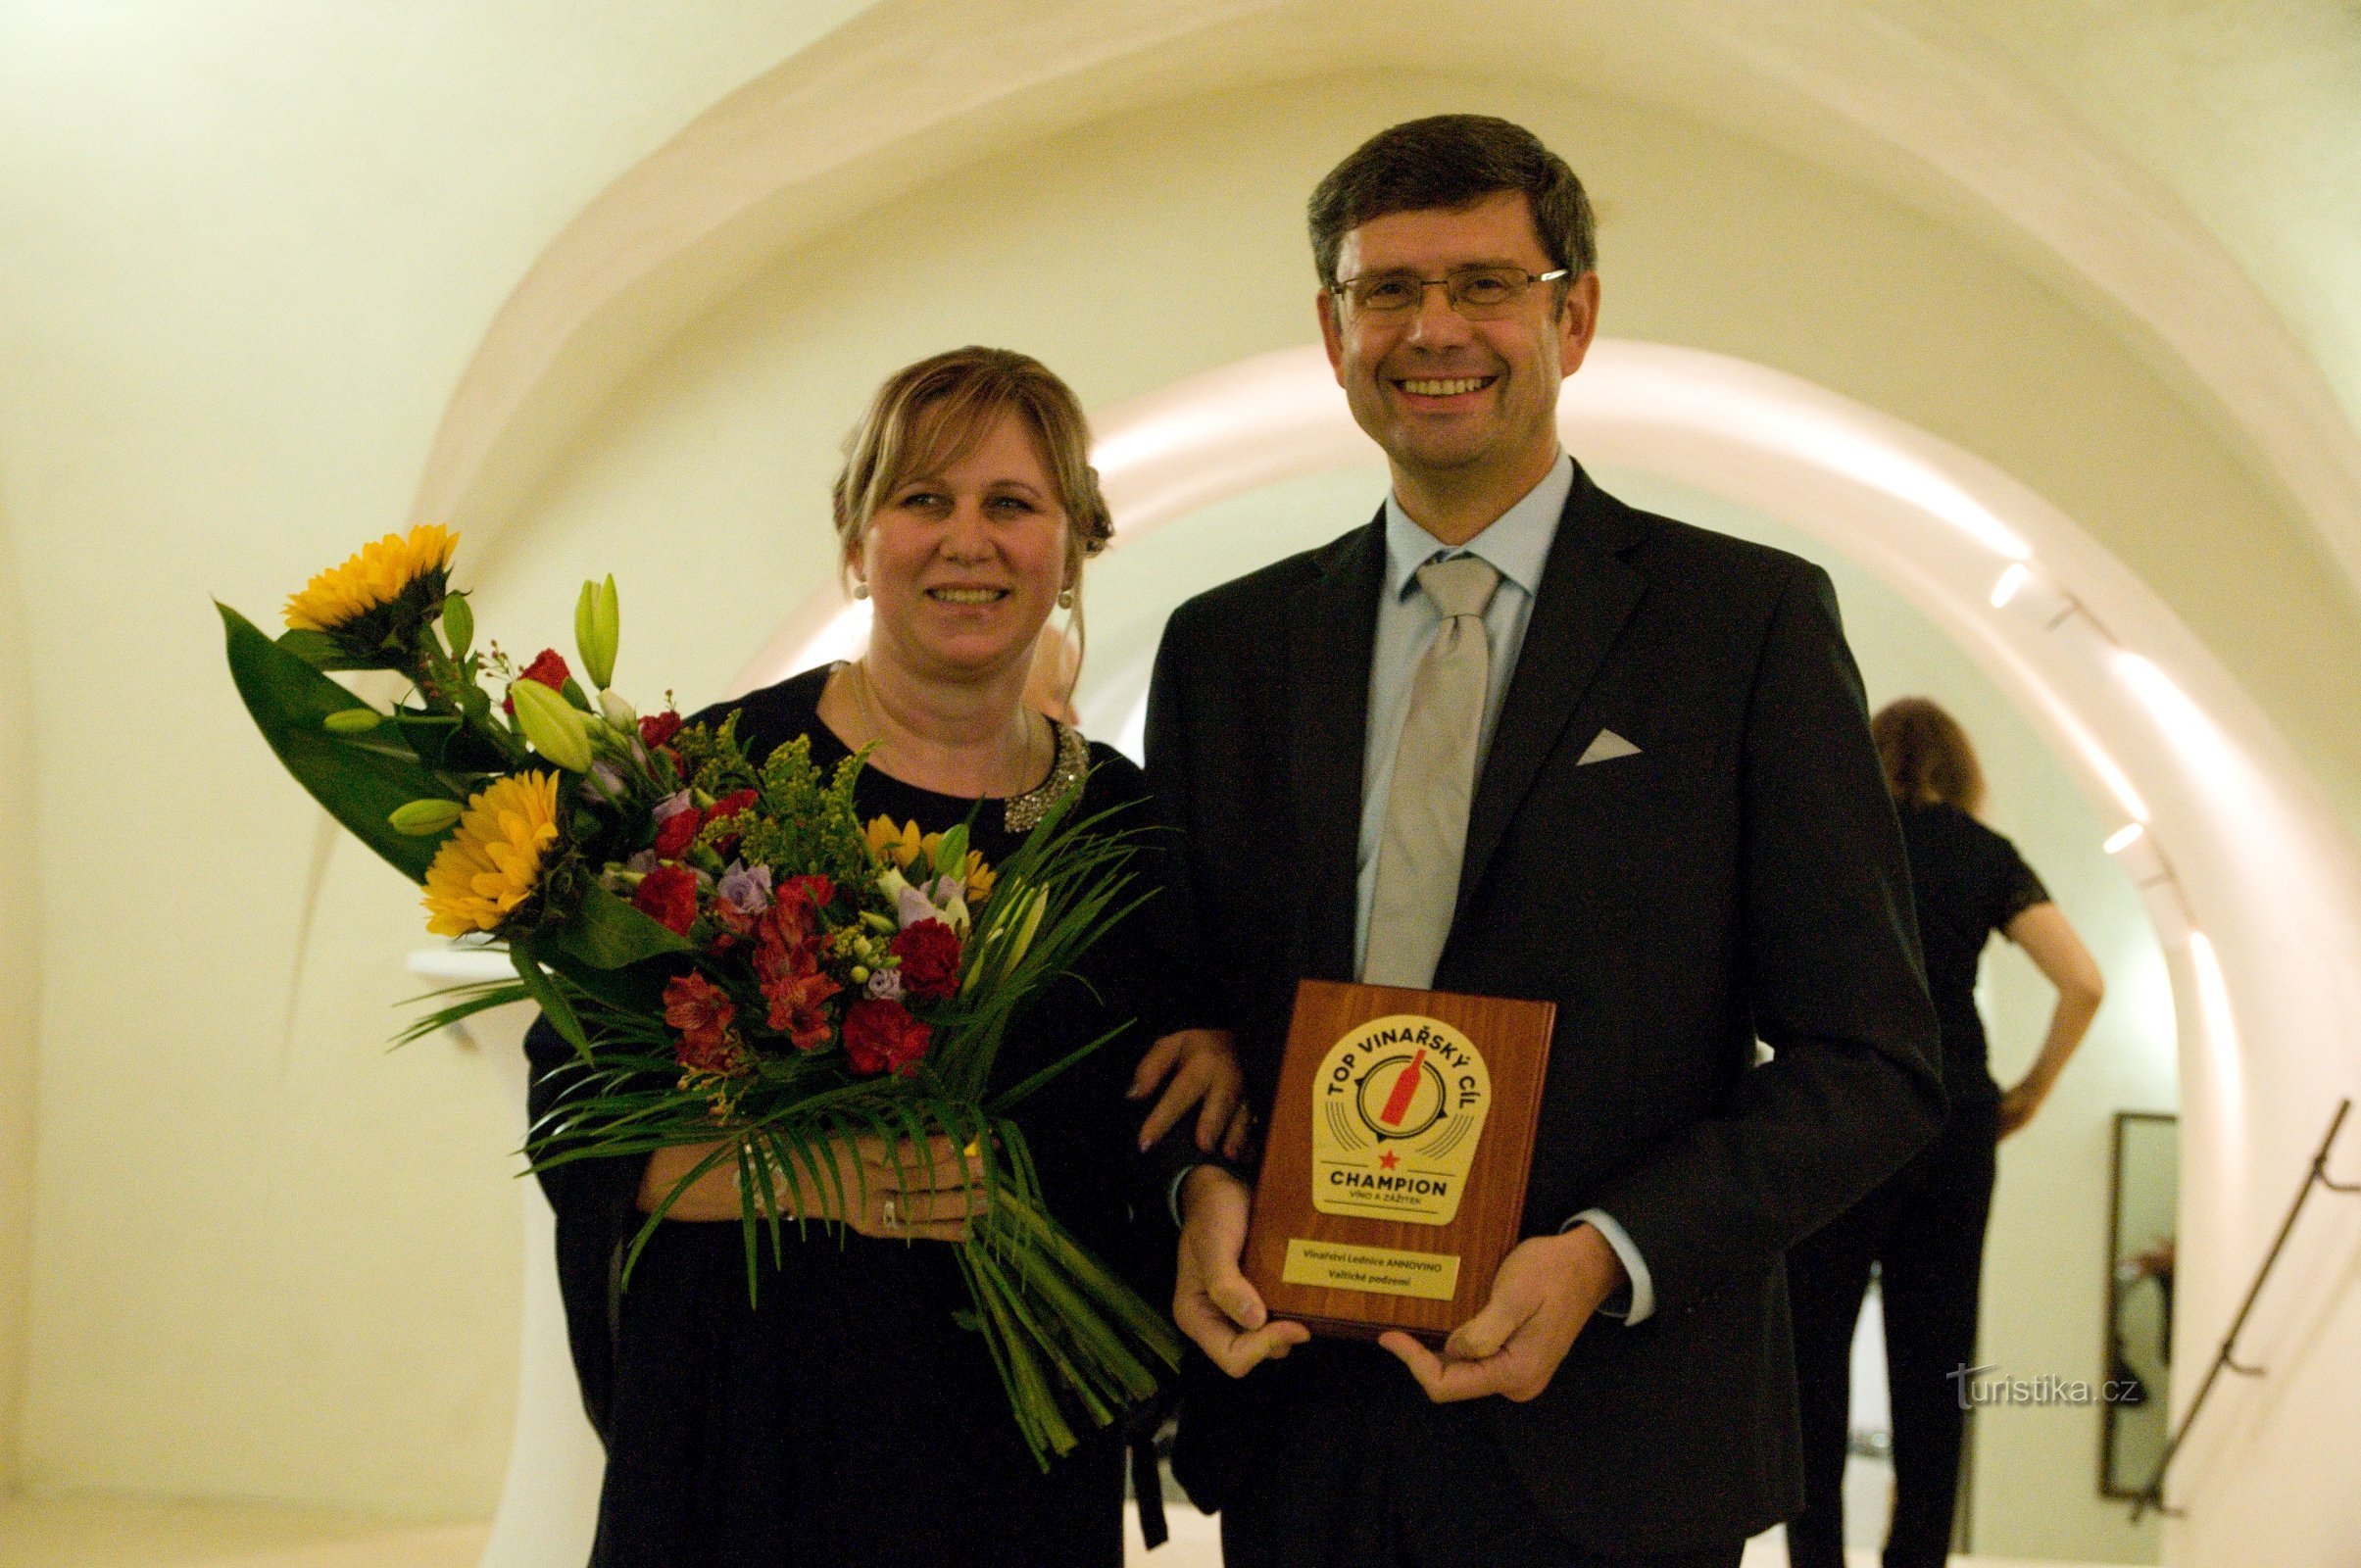 R: Žďárský bærer stolt et værdifuldt trofæ væk - plaketten Topvindestination CHAMPION.